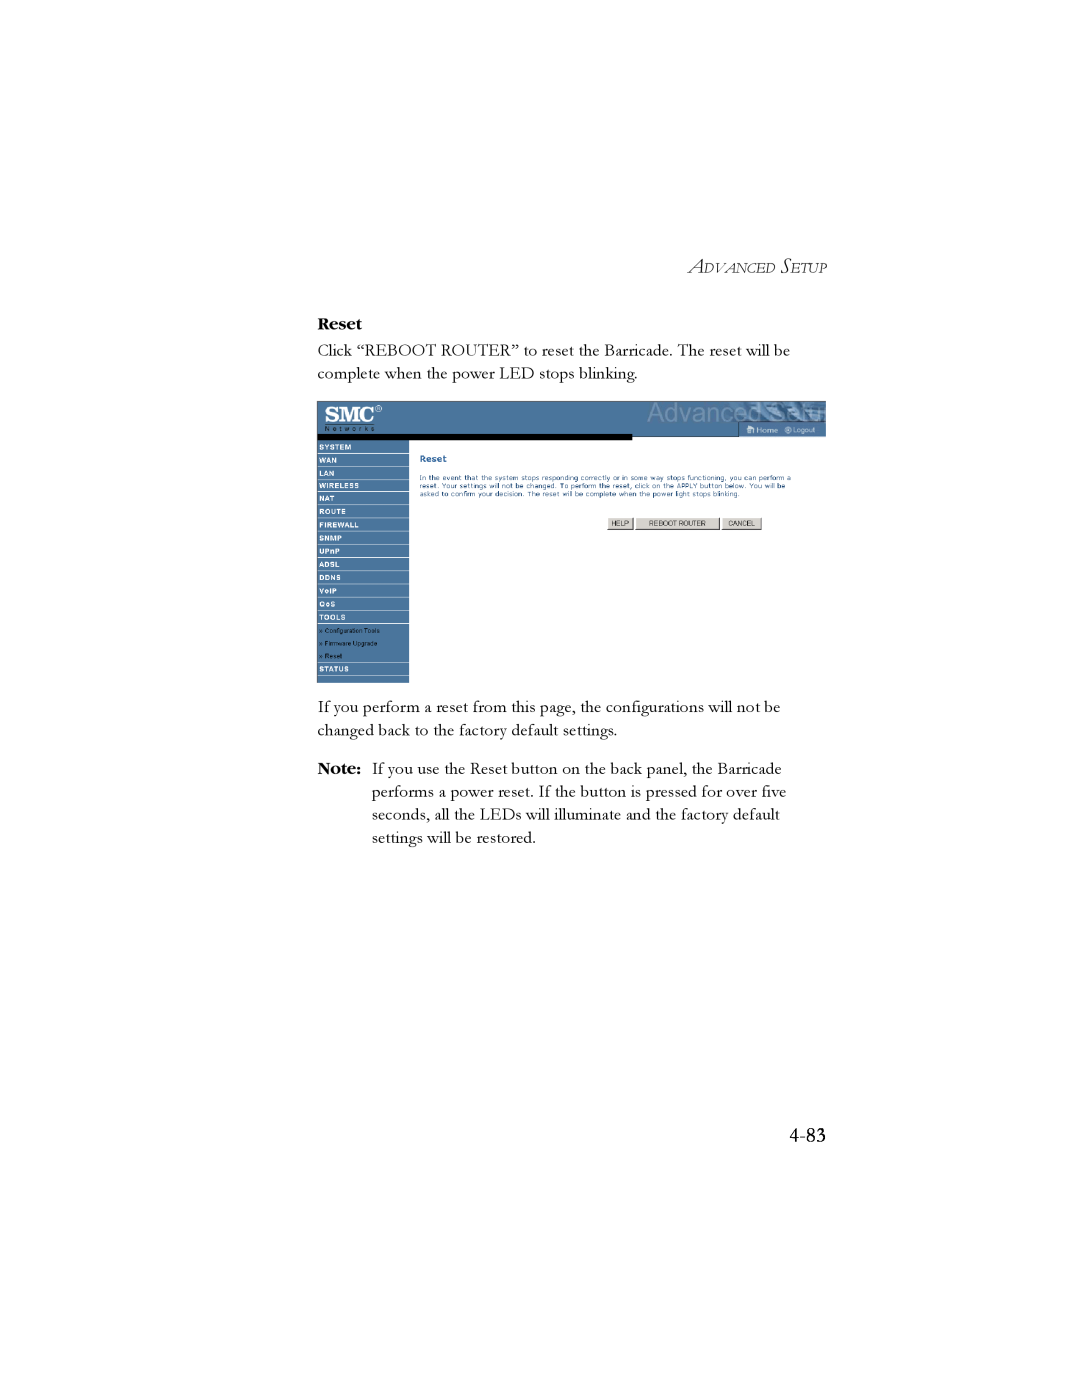 SMC Networks SMC7908VoWBRA manual 4-83, Reset 